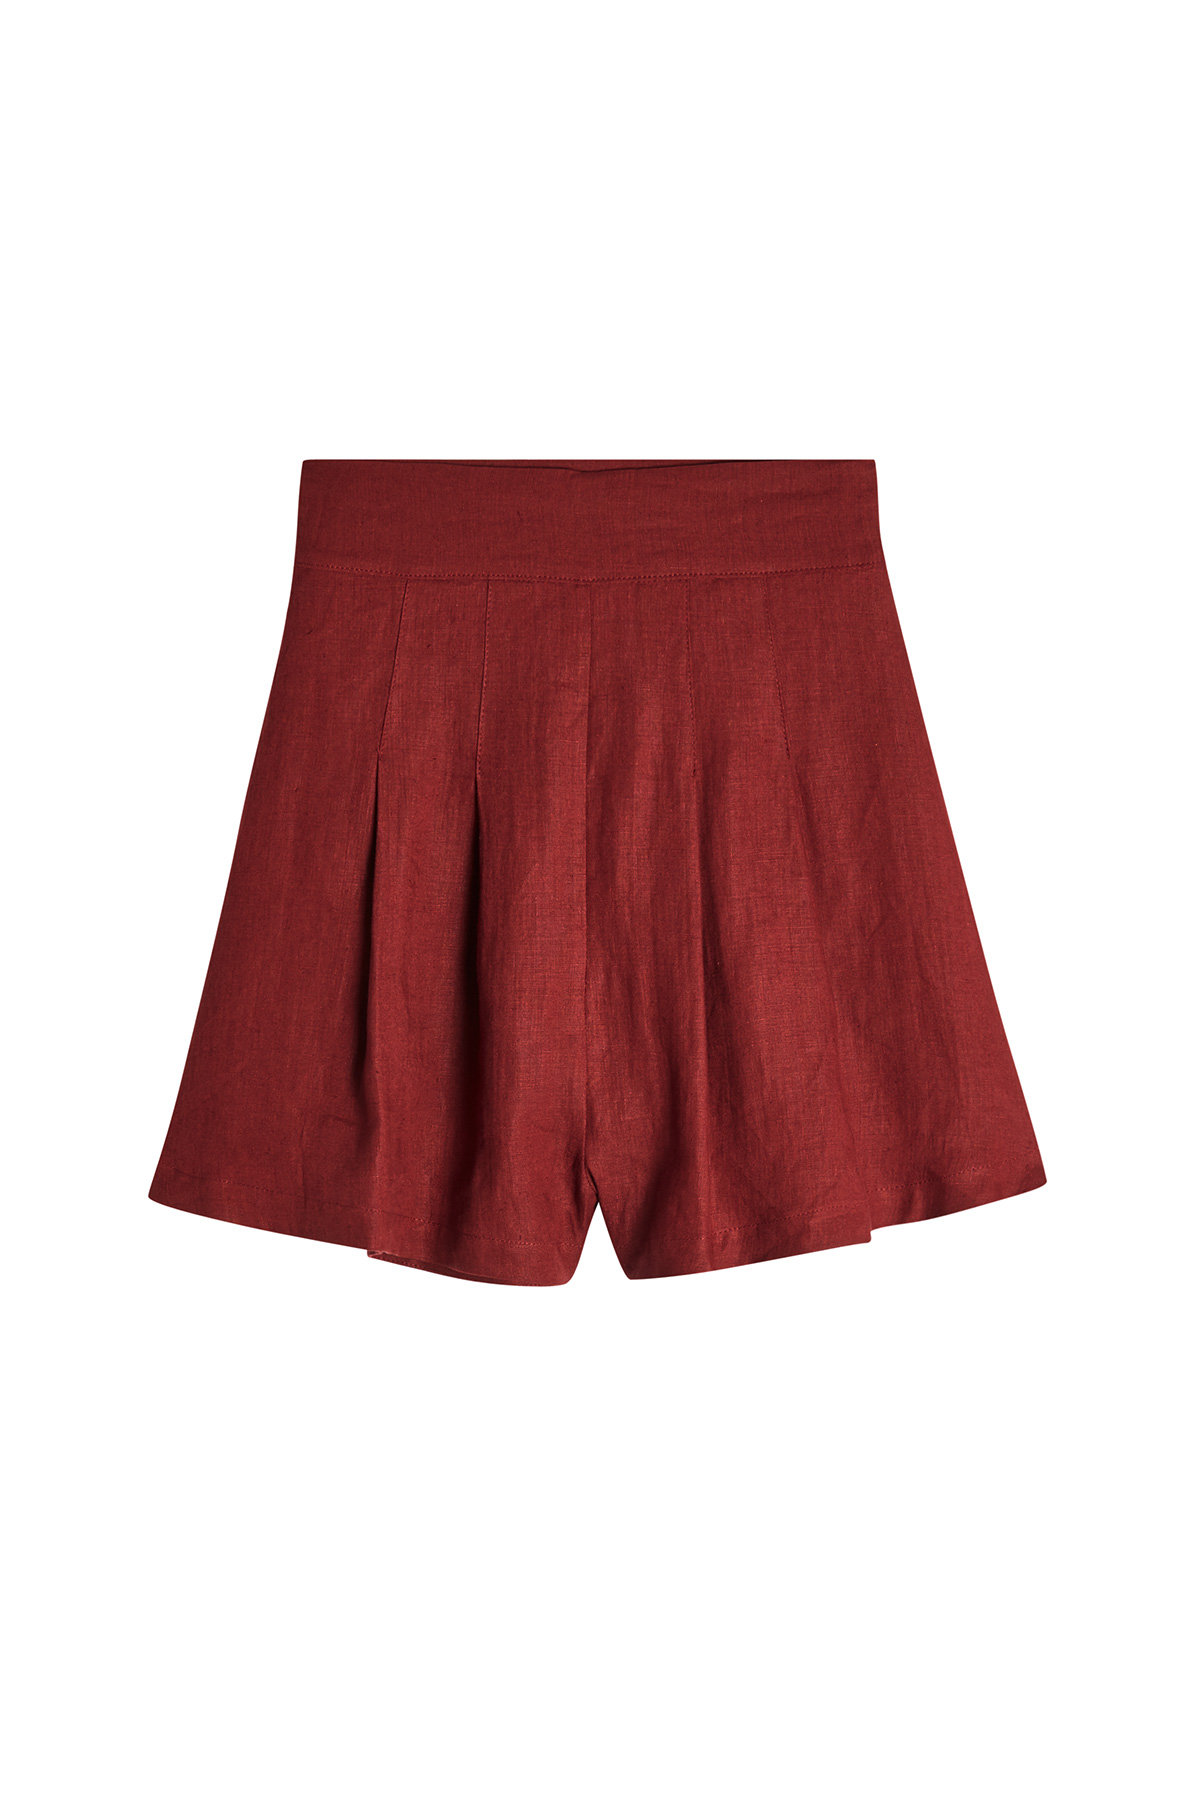 Three Graces - Rhoda Linen Shorts